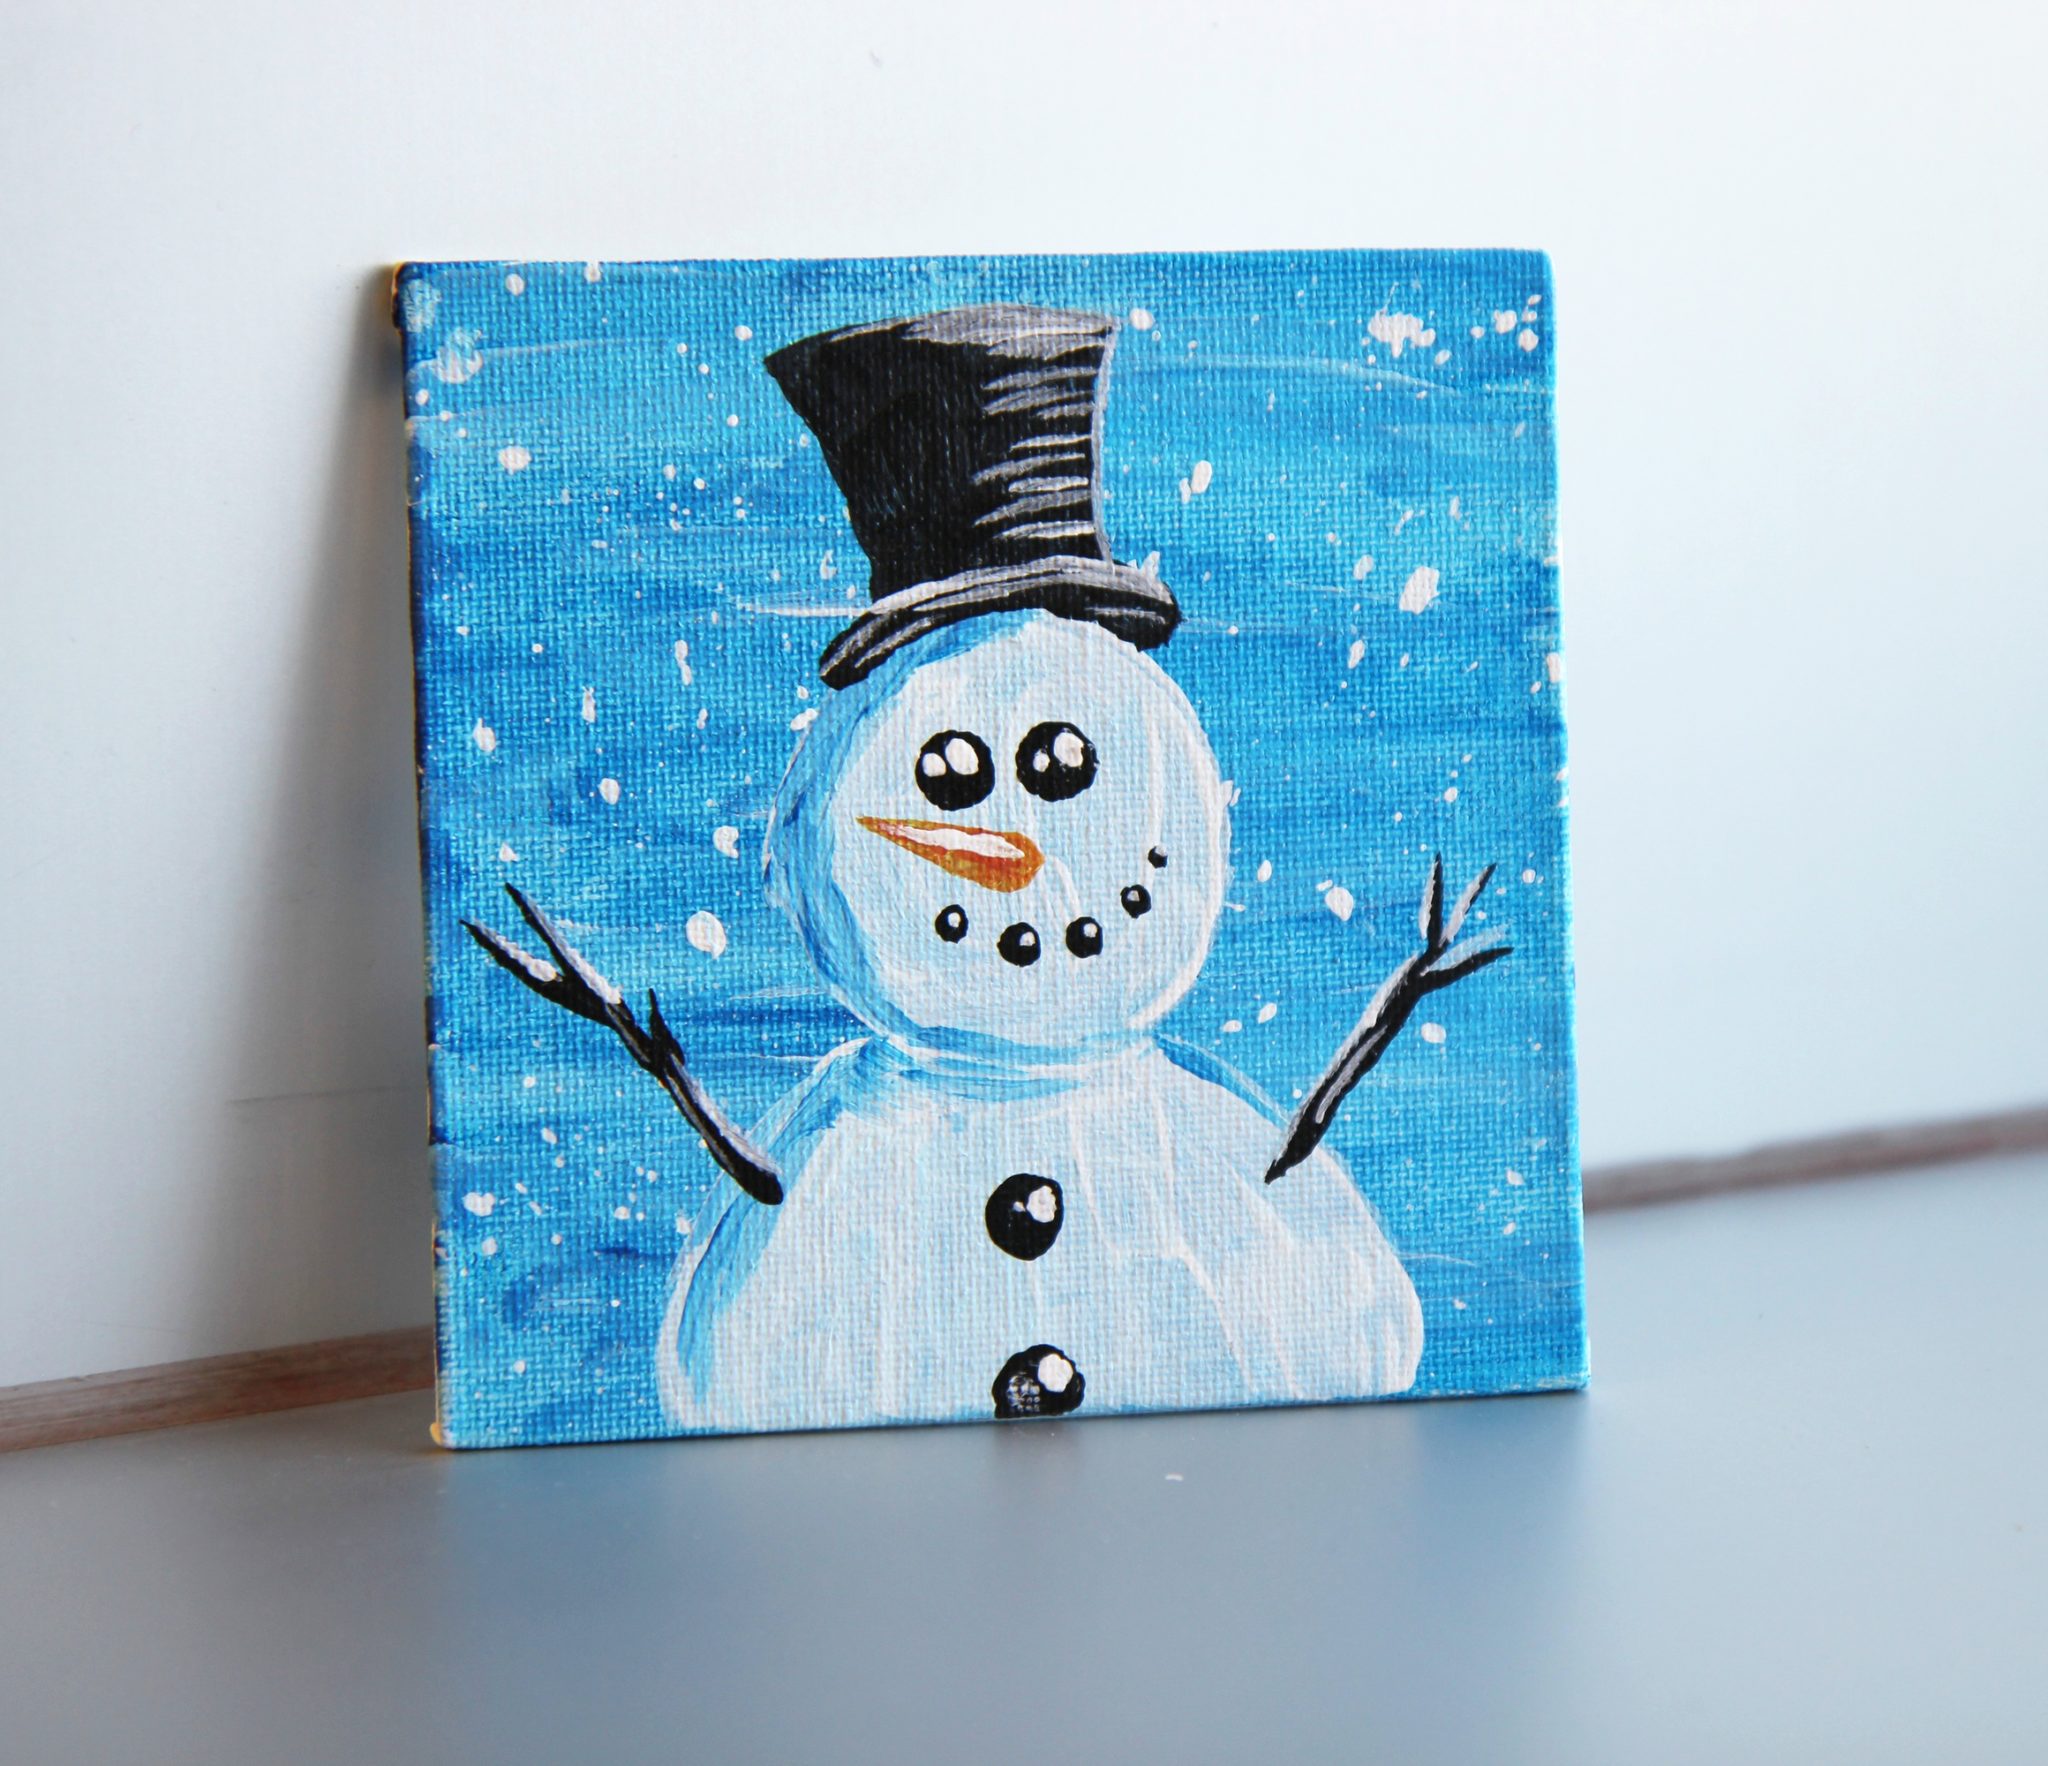 Snowman painting